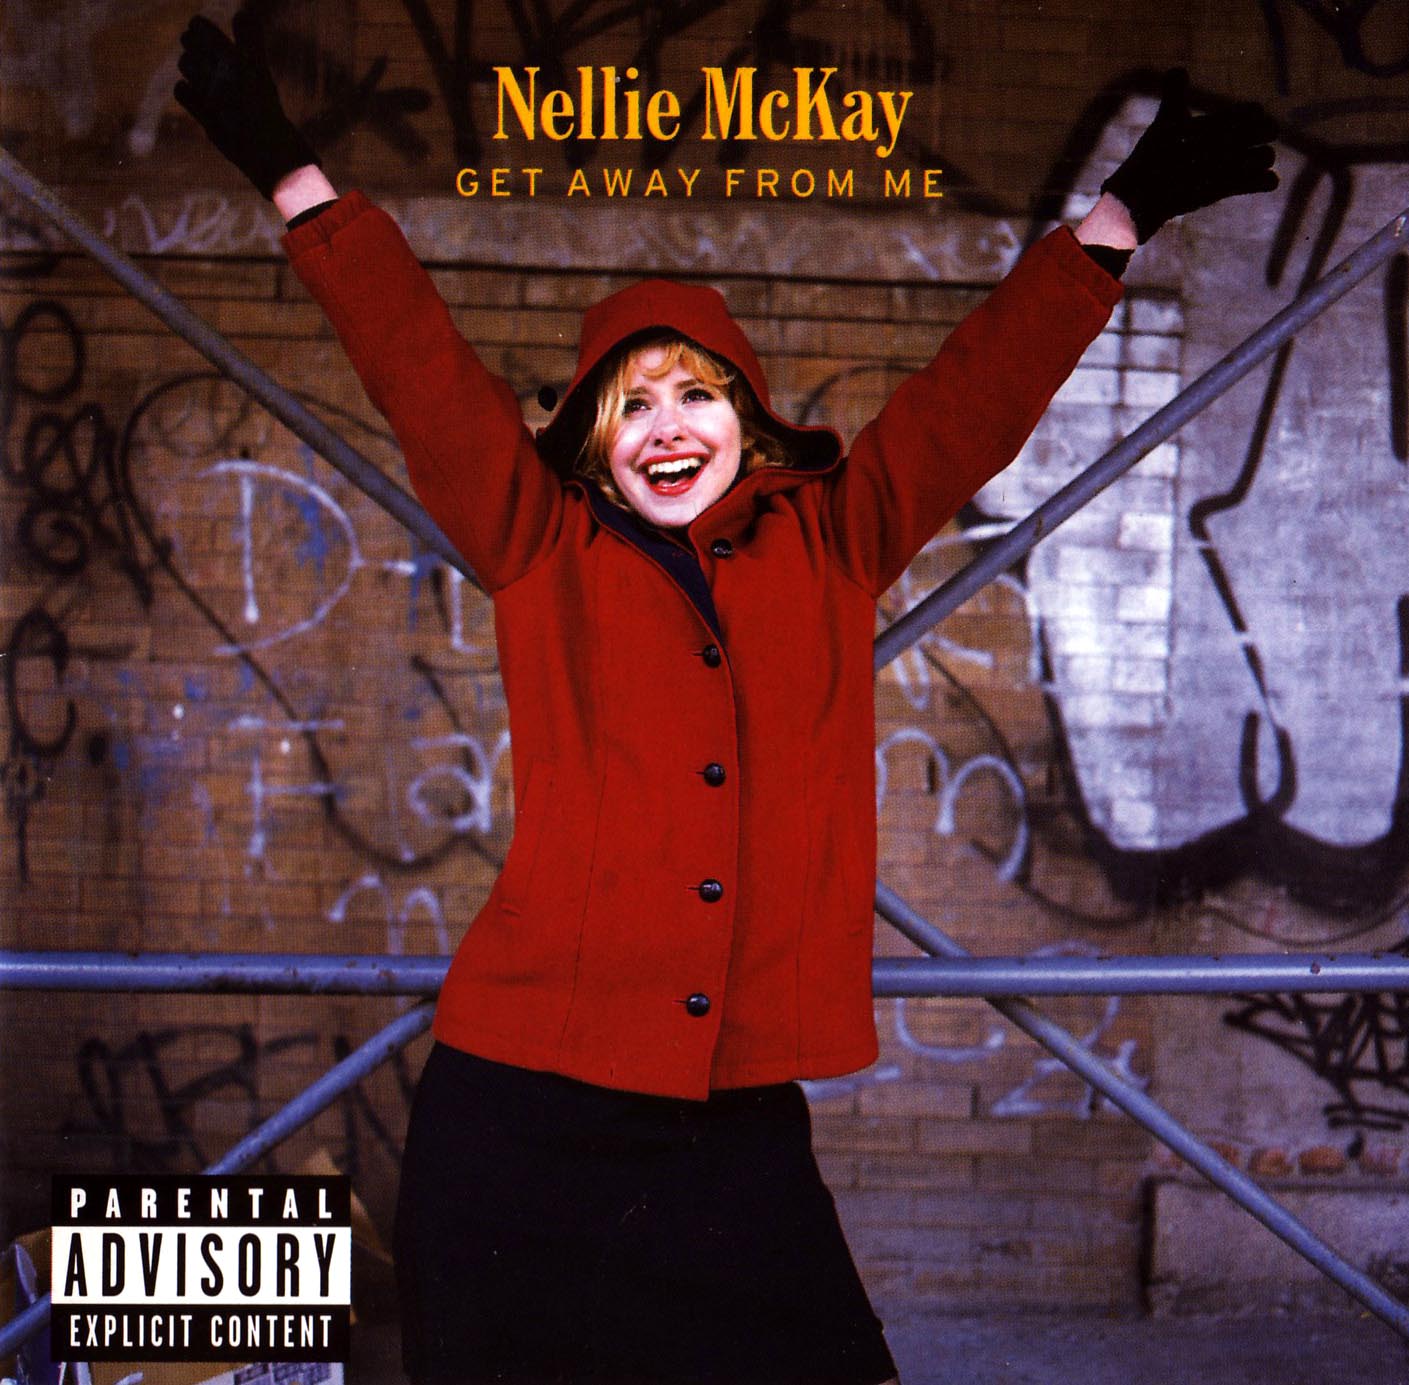 Nellie-McKay-Get-away-from-me-.jpg